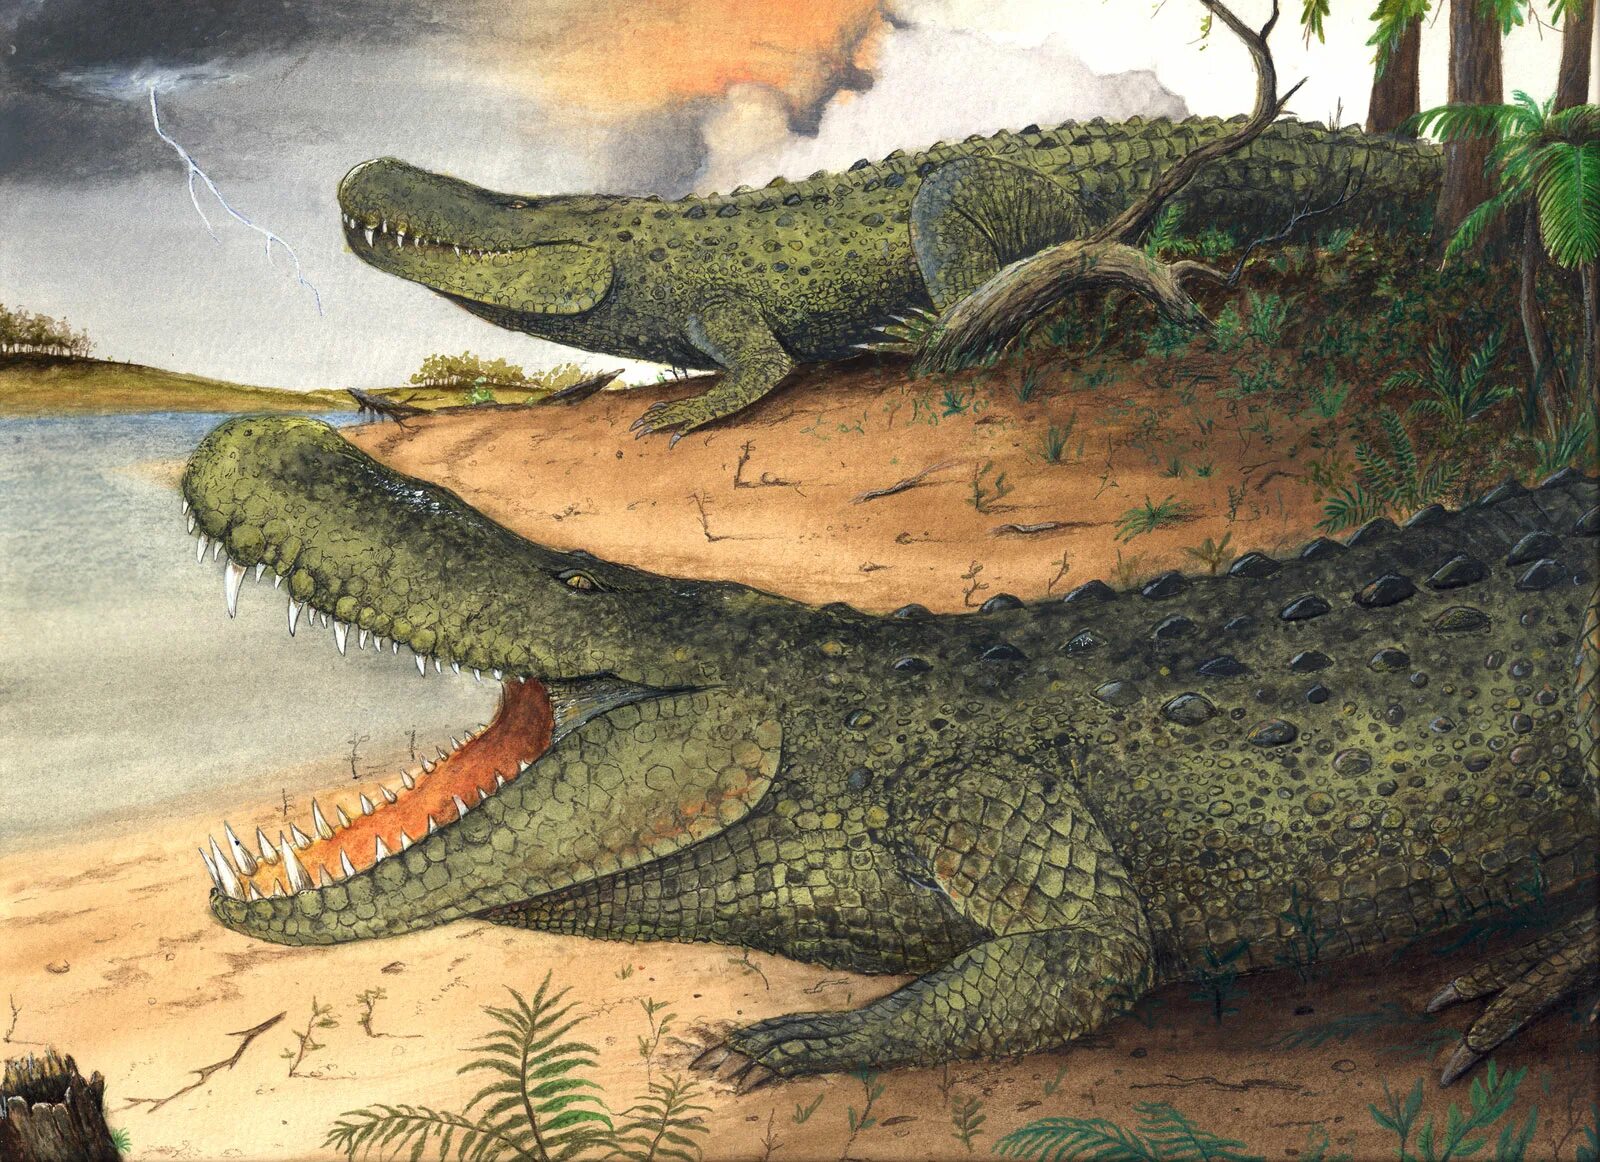 Предки современных рептилий. Дейнозуха пурусзавр. Кайман пурусзавр. Пурусзавр крокодил. Гигантский Кайман пурусзавр.